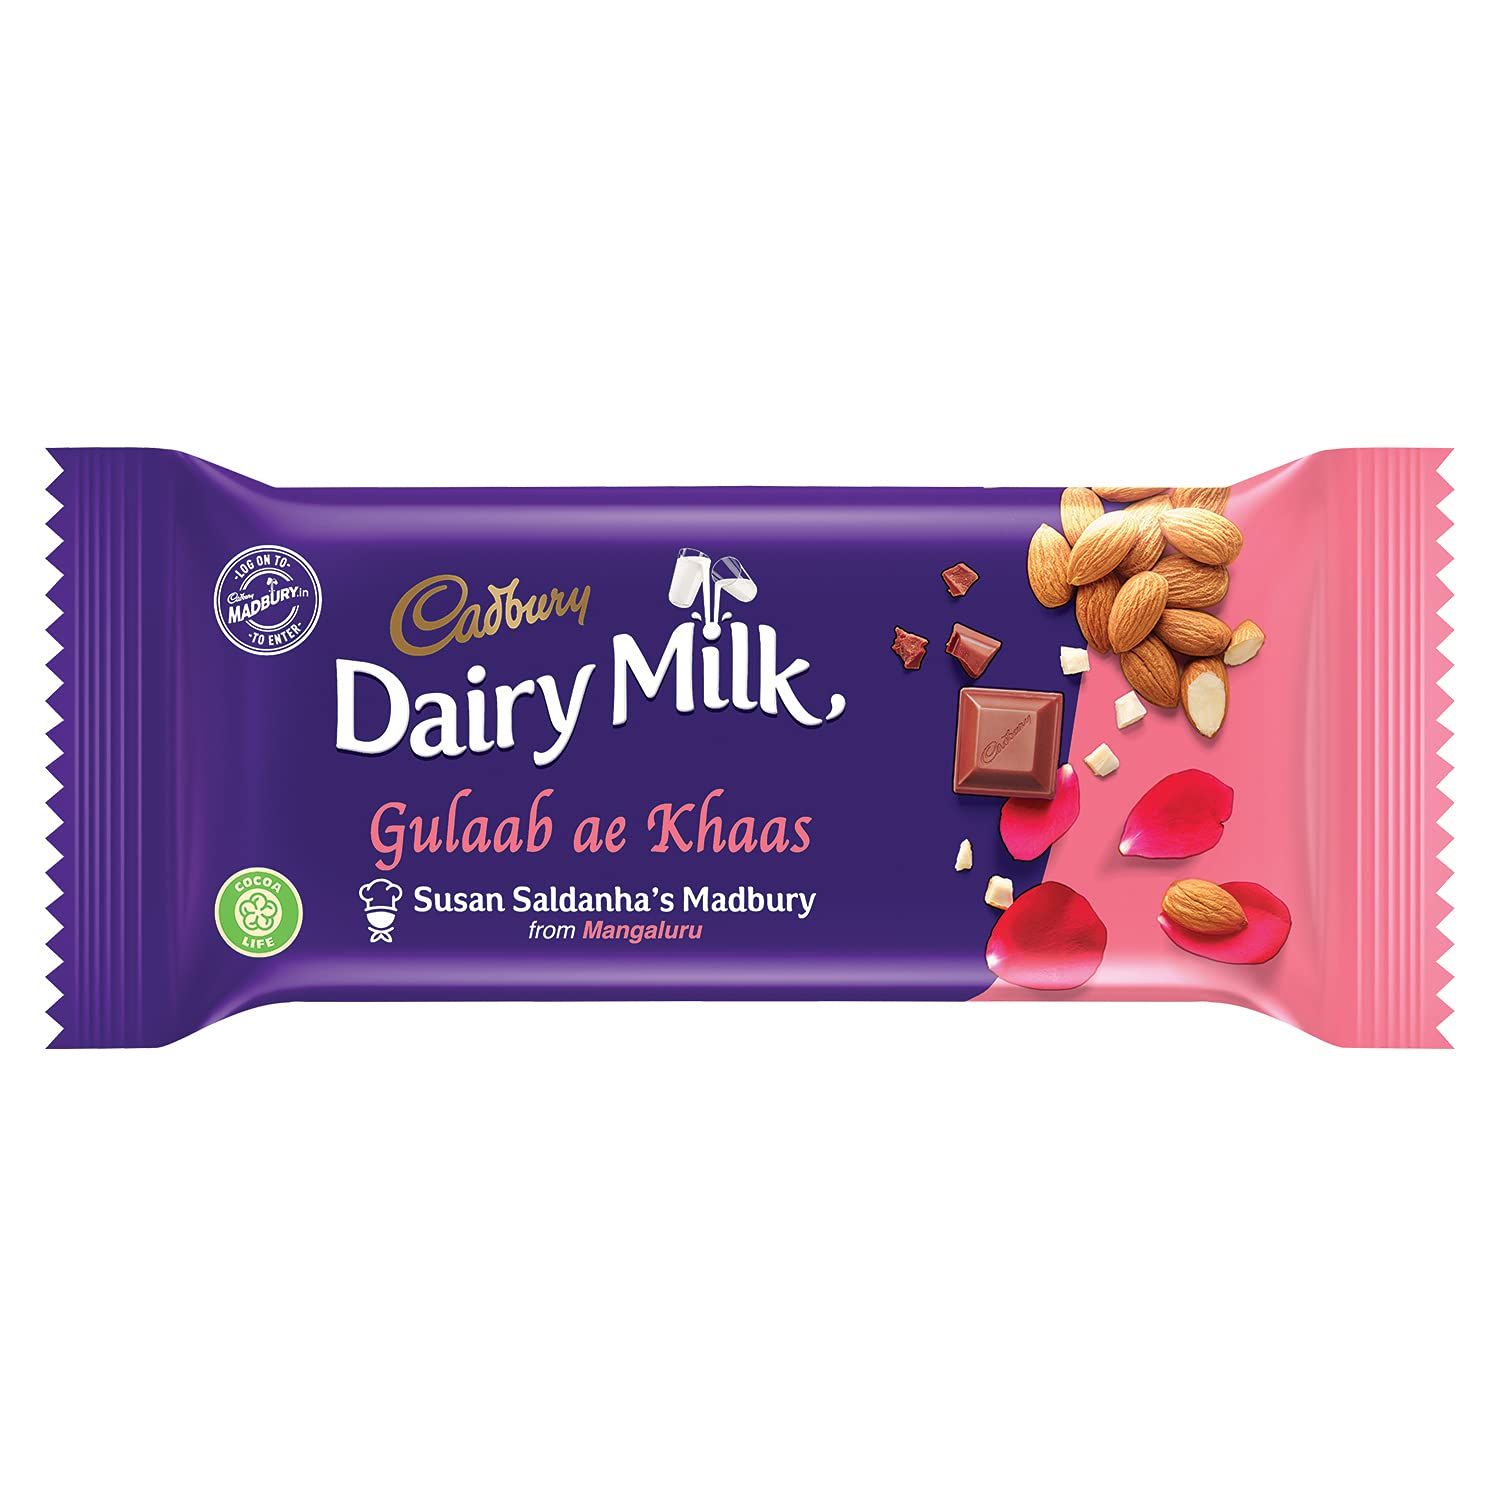 Cadbury Dairy Milk Madbury Gulaab e Khaas Chocolate Bar Image